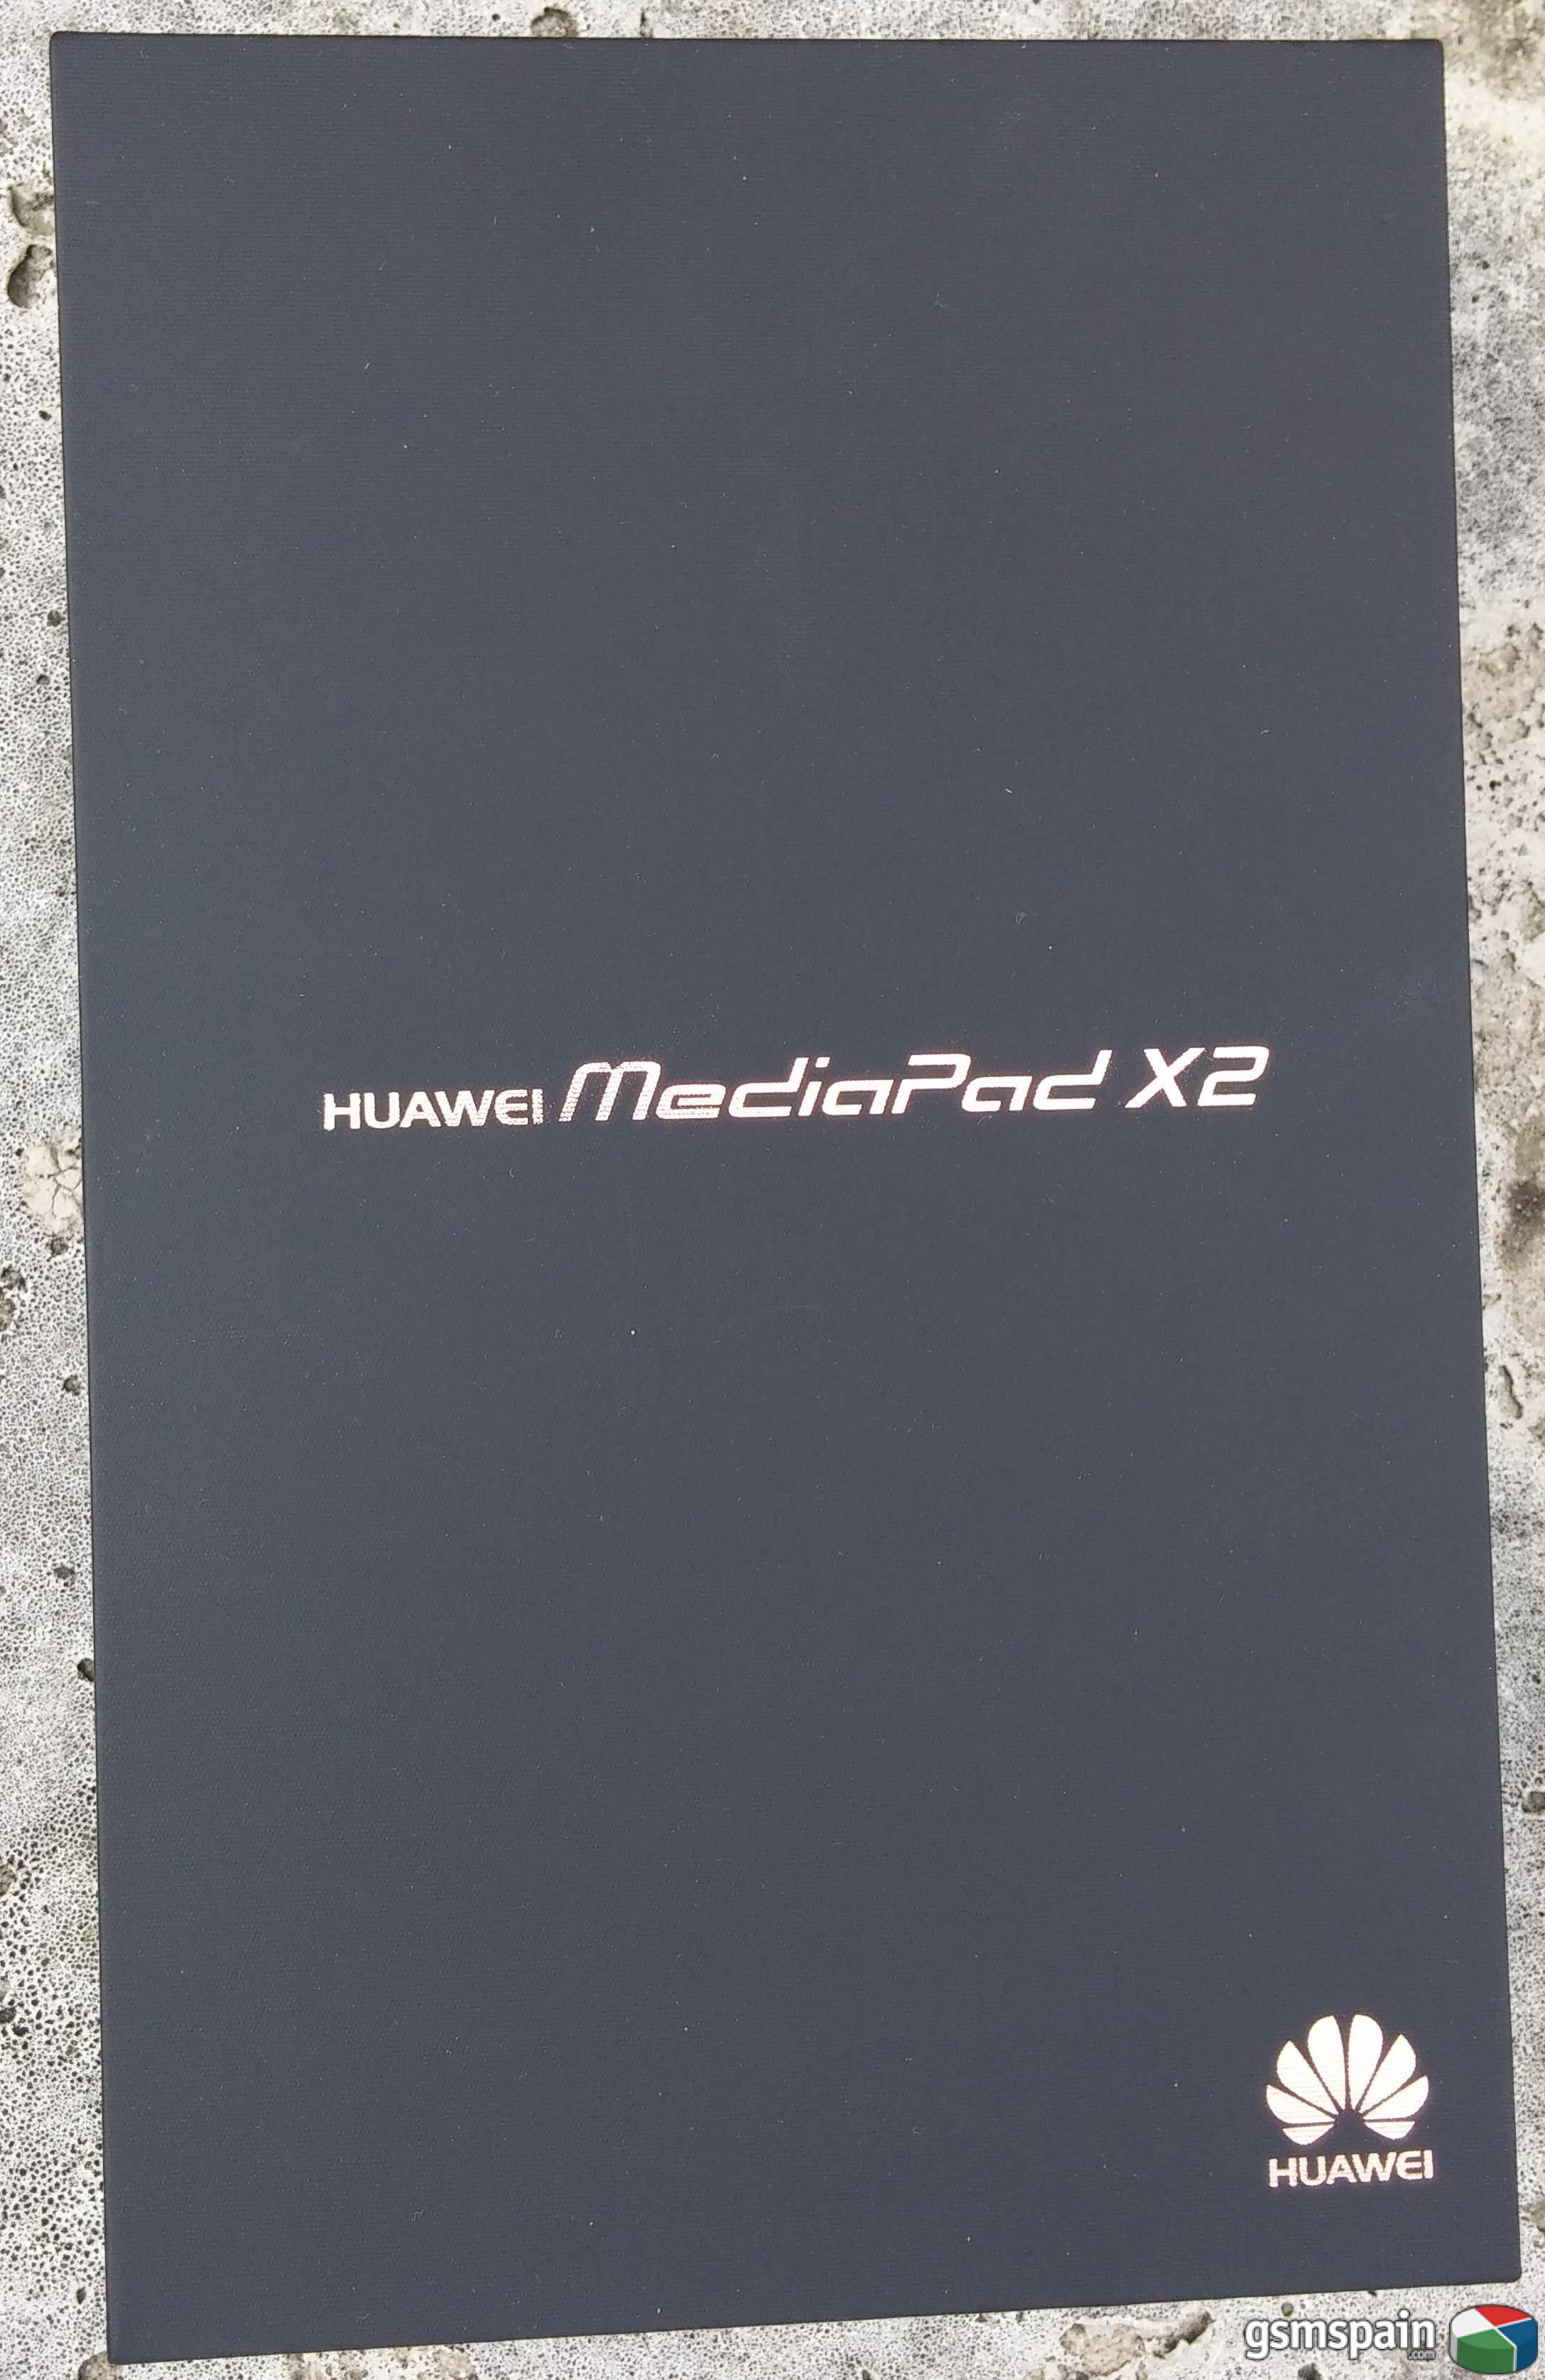 [FOTOREVIEW] Huawei MediaPad X2